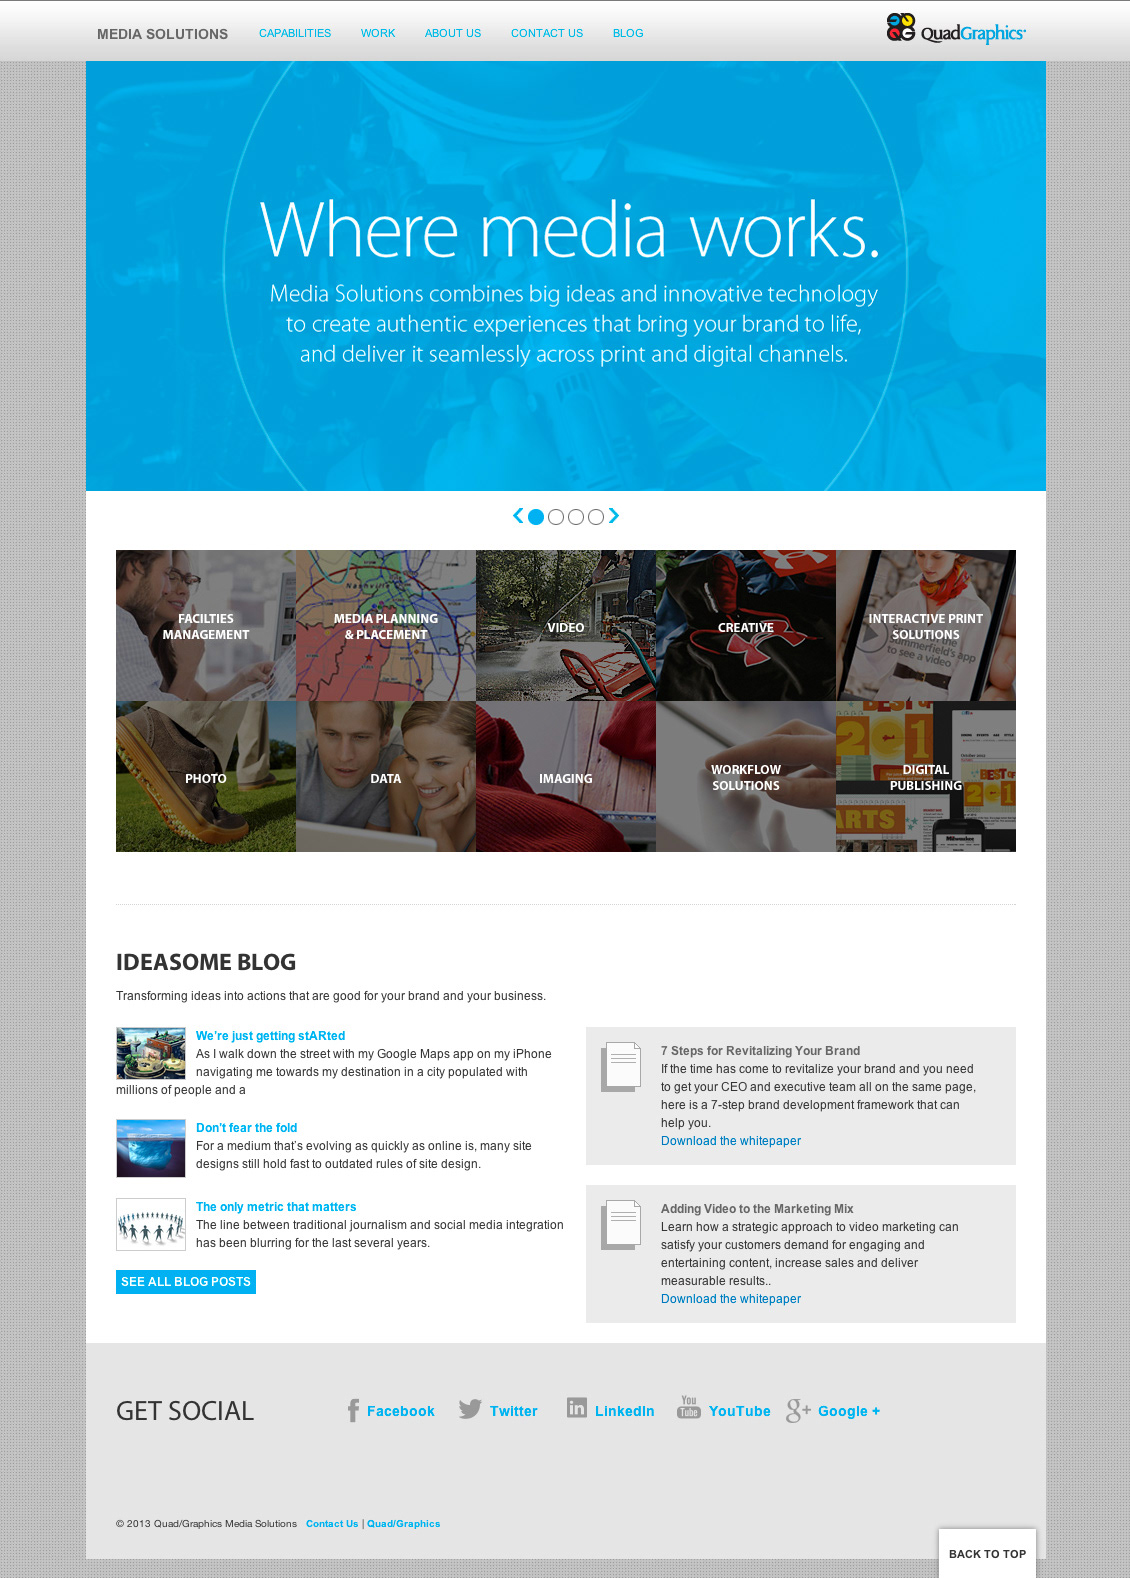 Quad/Graphics Media Solutions Media Solutions video responsive website Channel Integration